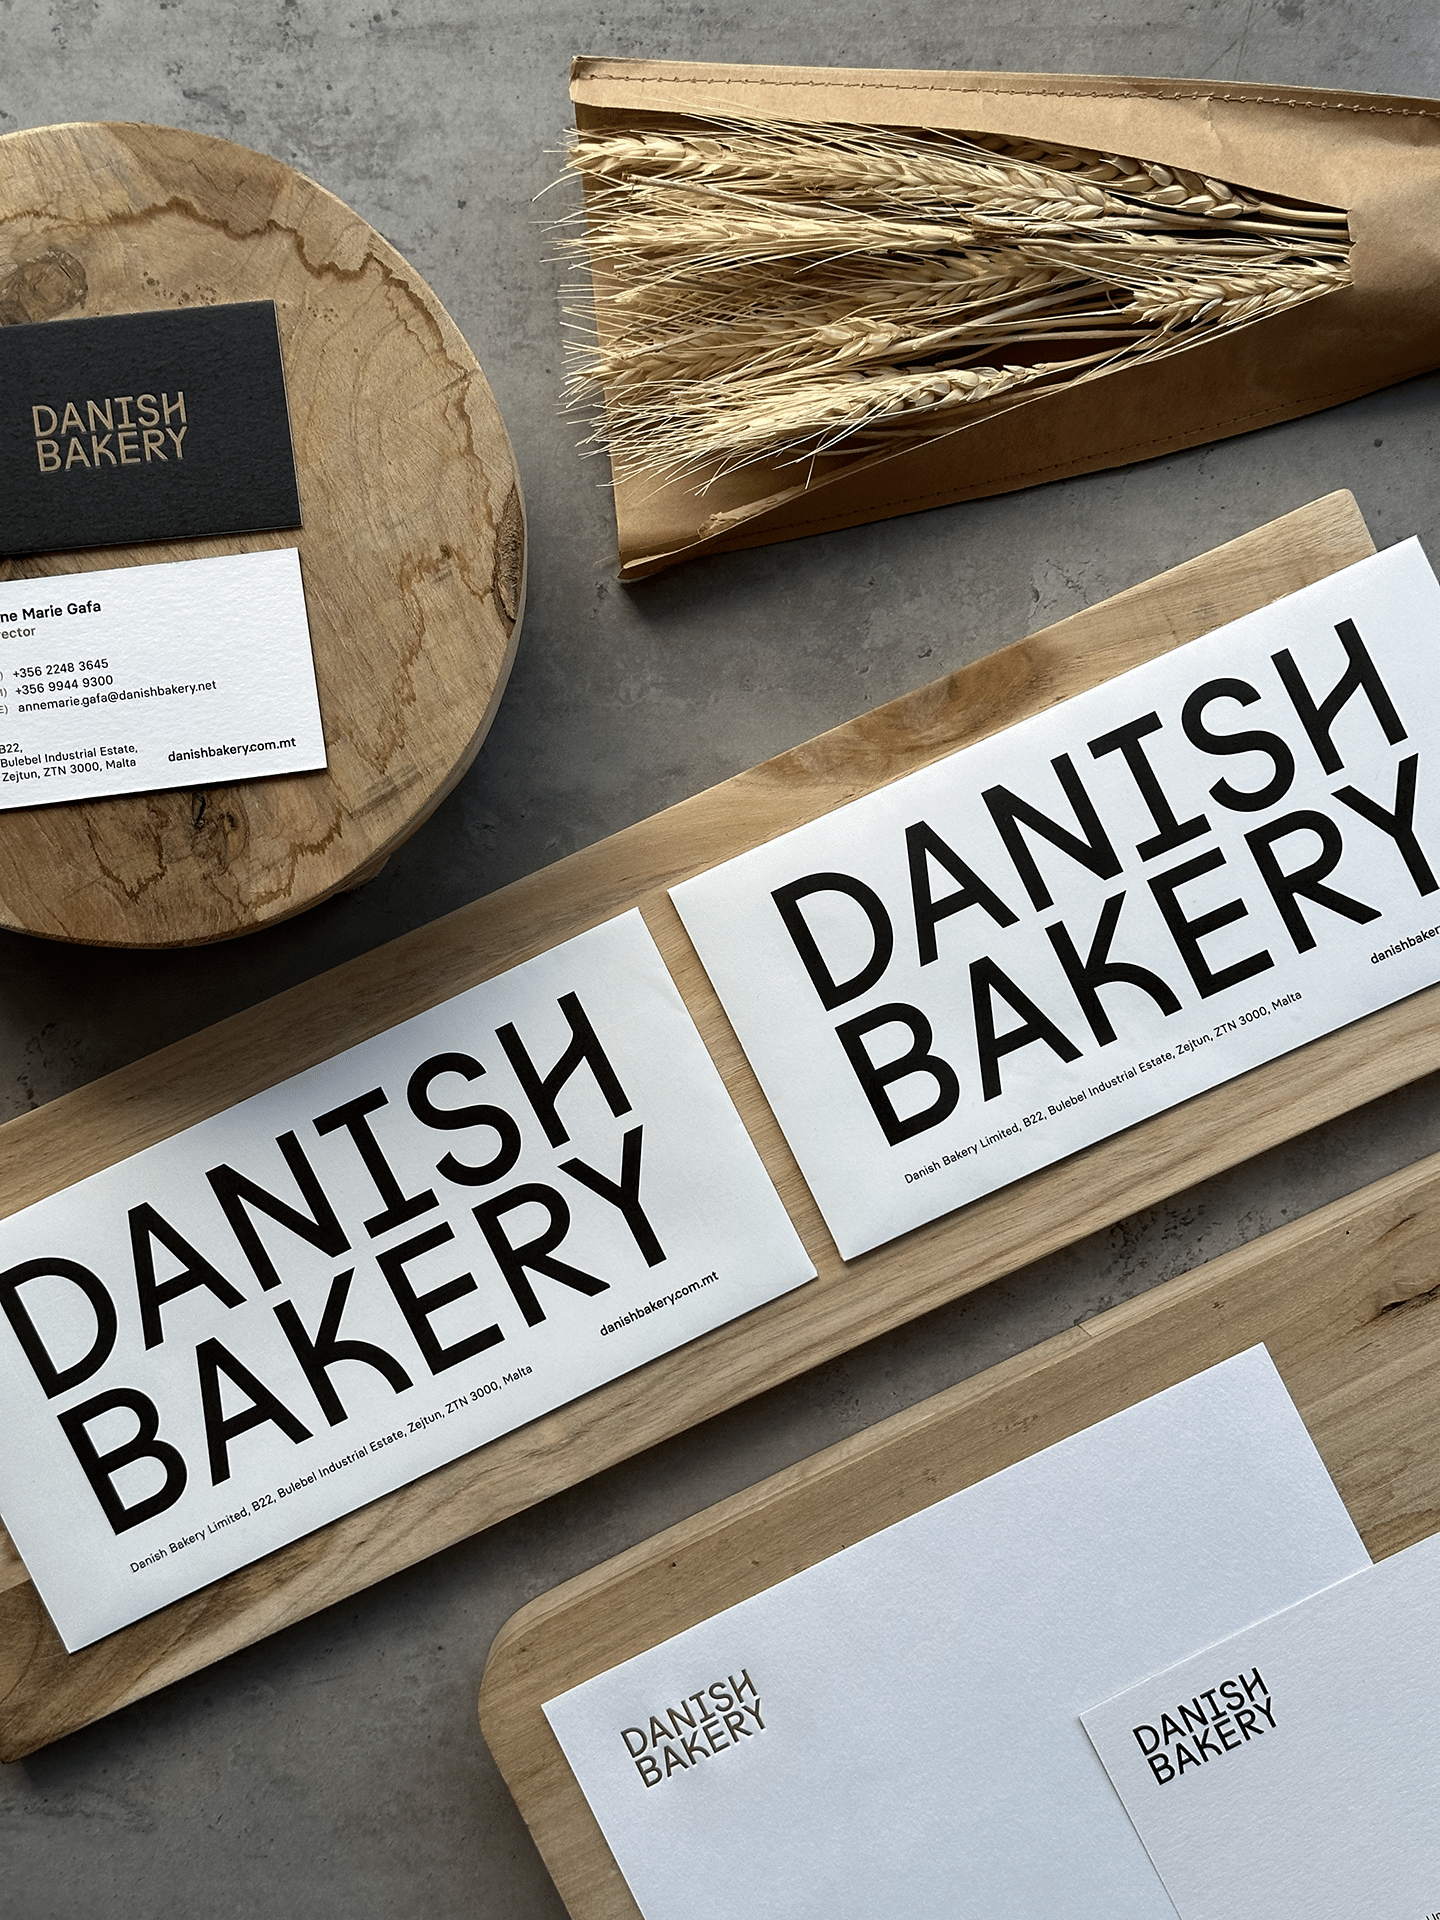 Danish Bakery Brand Identity Redesign